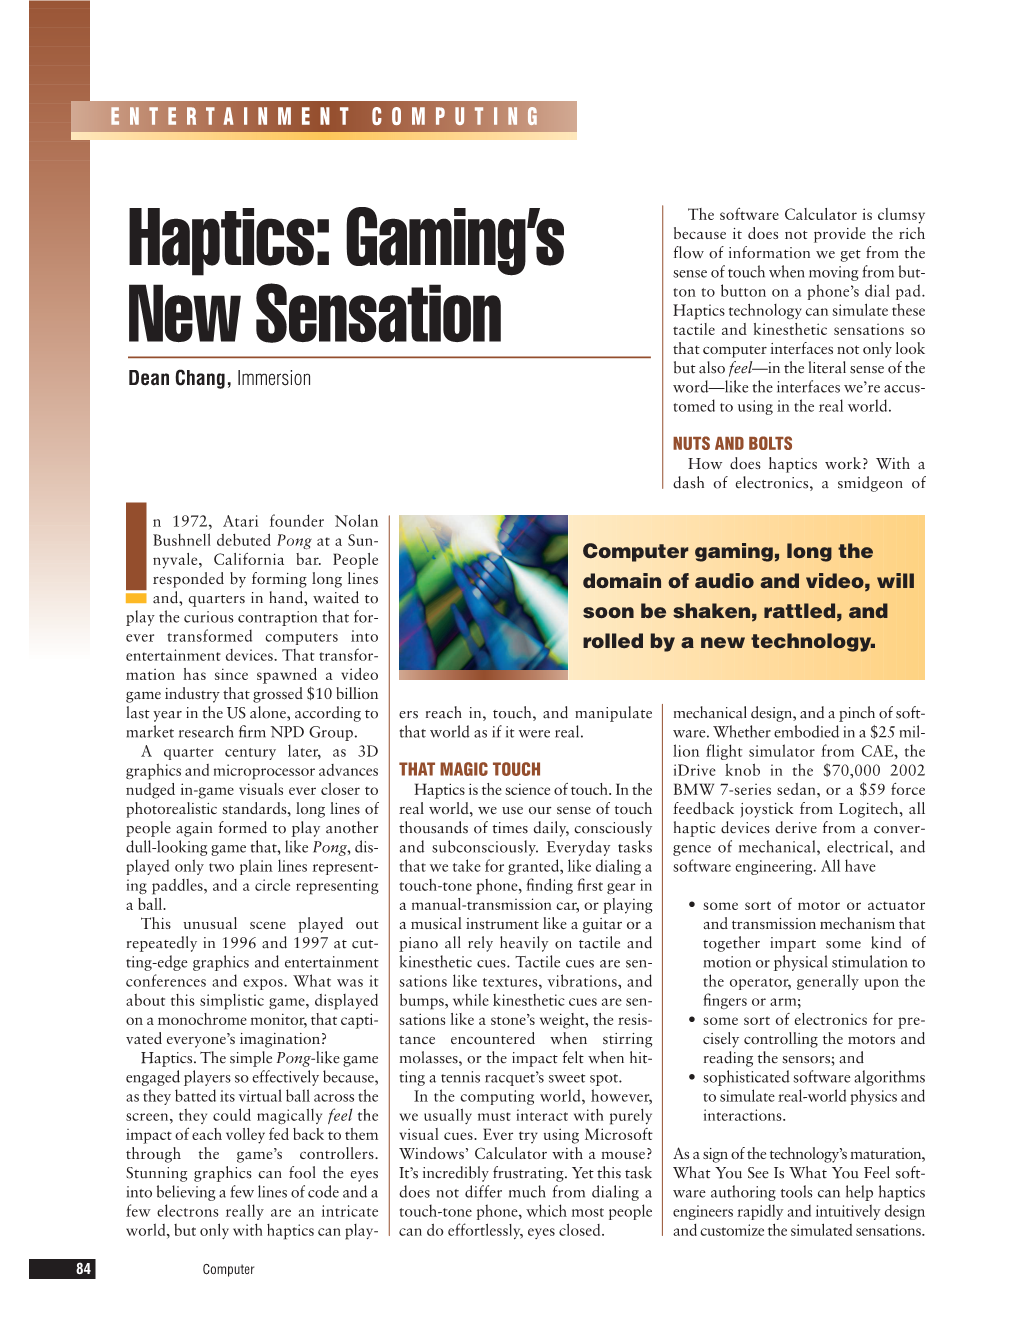 Haptics: Gaming's New Sensation